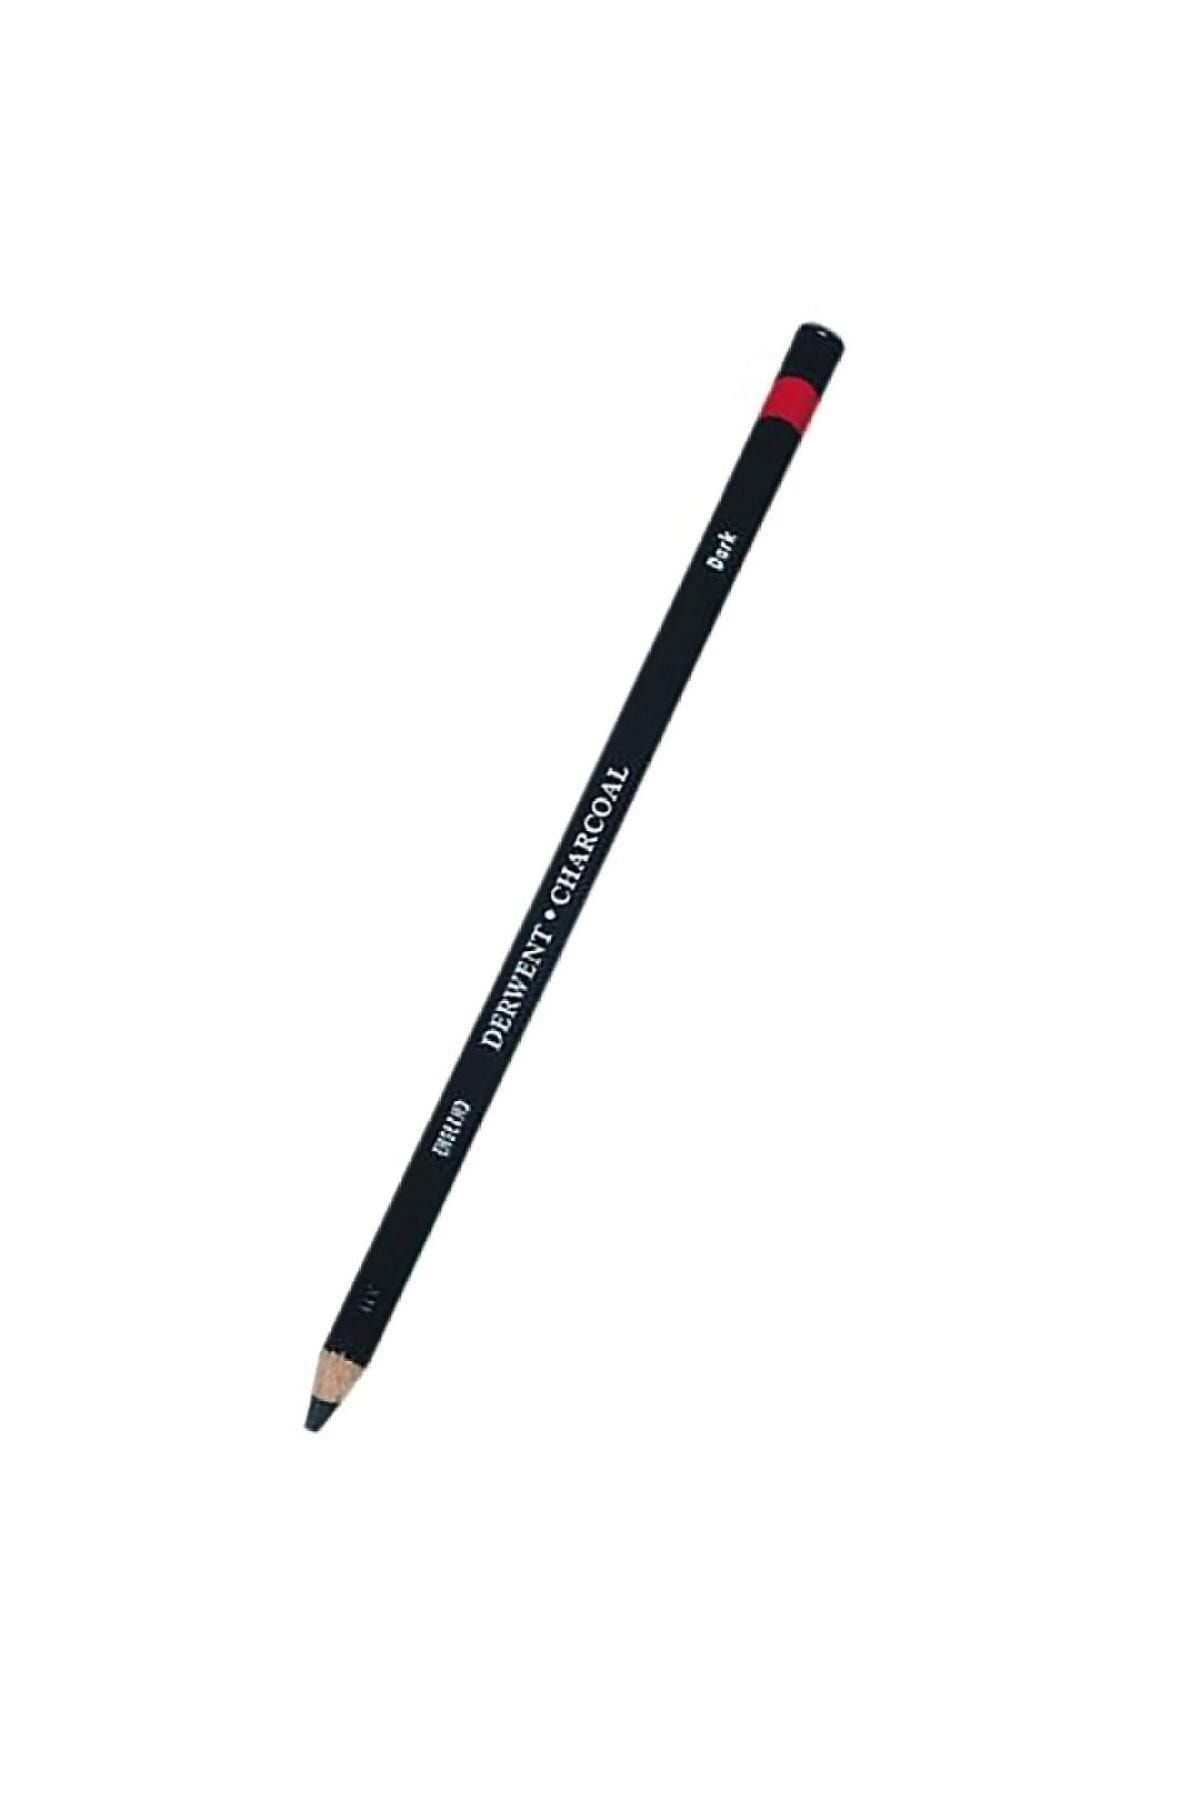 Derwent Tinted Charcoal Pencil (renkli Kömür Kalemi) Burnt Earth (tc19)